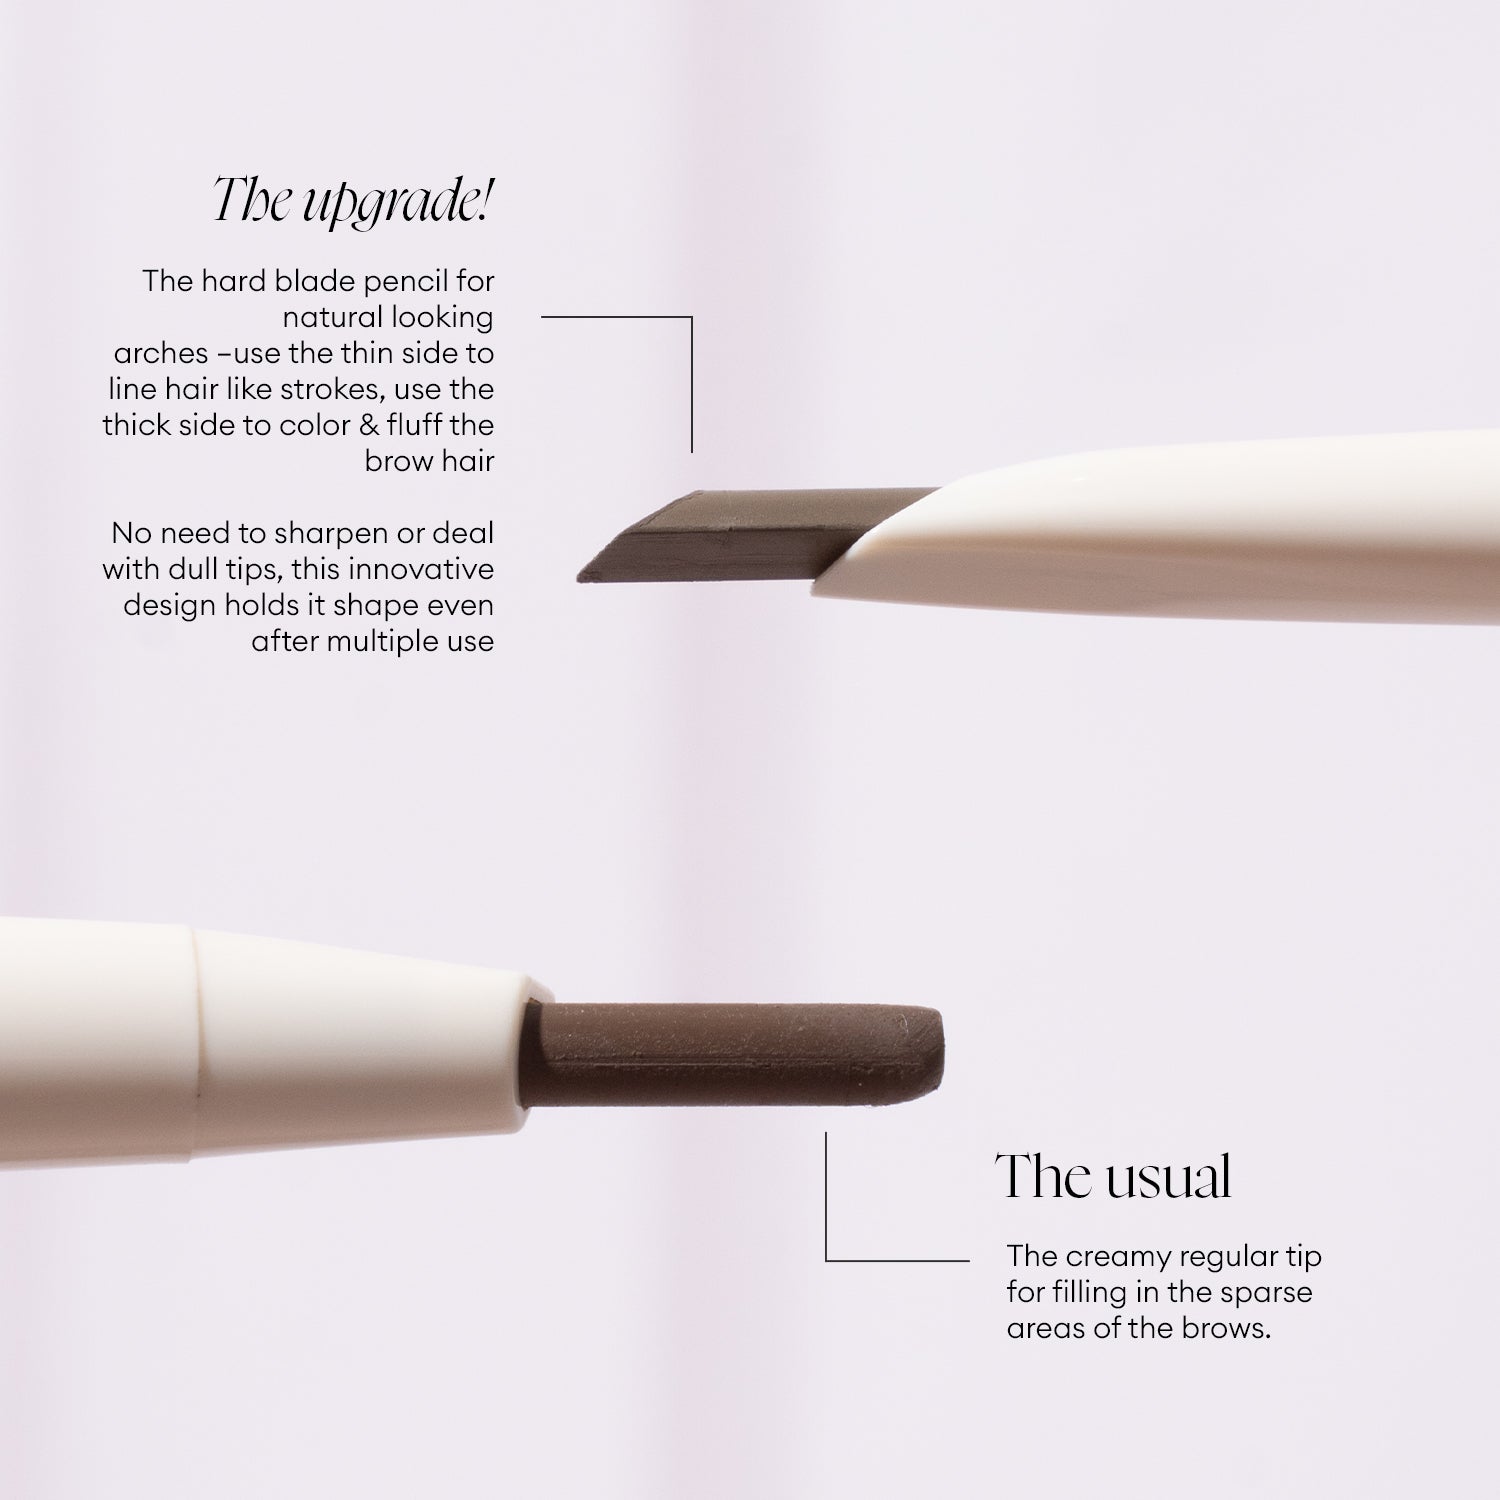 blk cosmetics daydream pencil brow blade precision + brush